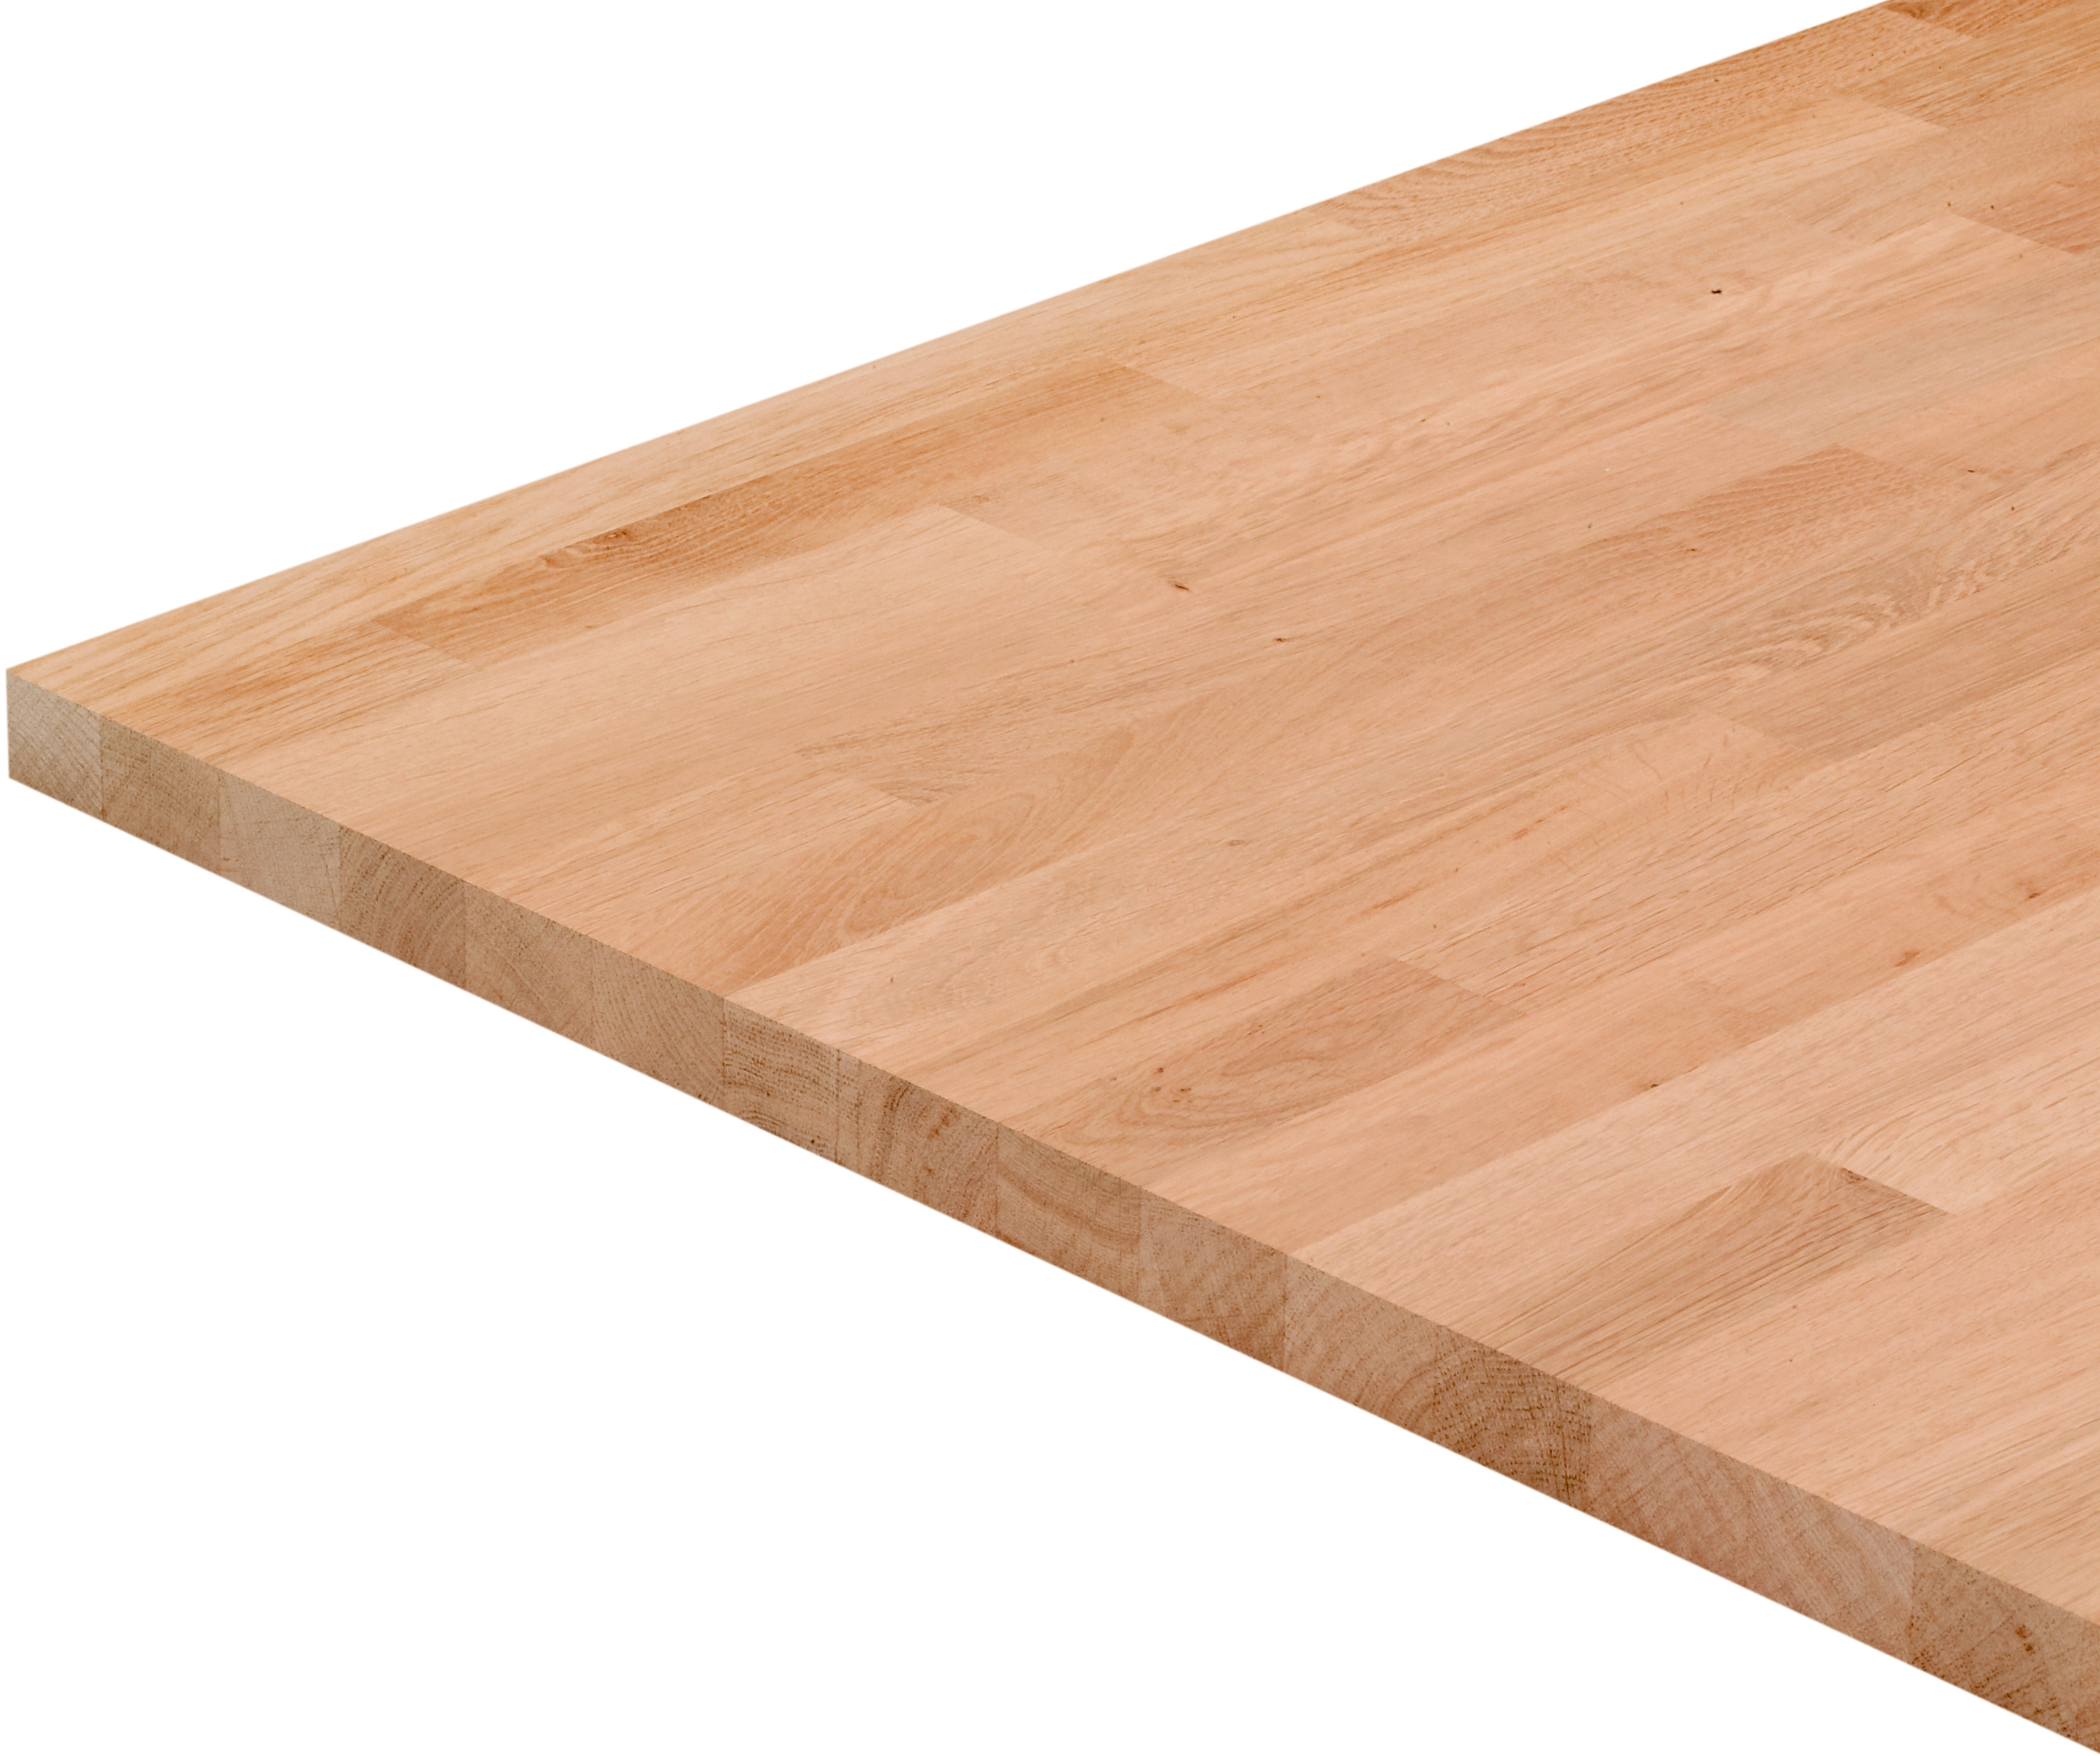 Massivholz Arbeitsplatte Buche 240 cm x 63,5 cm x 2,7 cm kaufen bei OBI